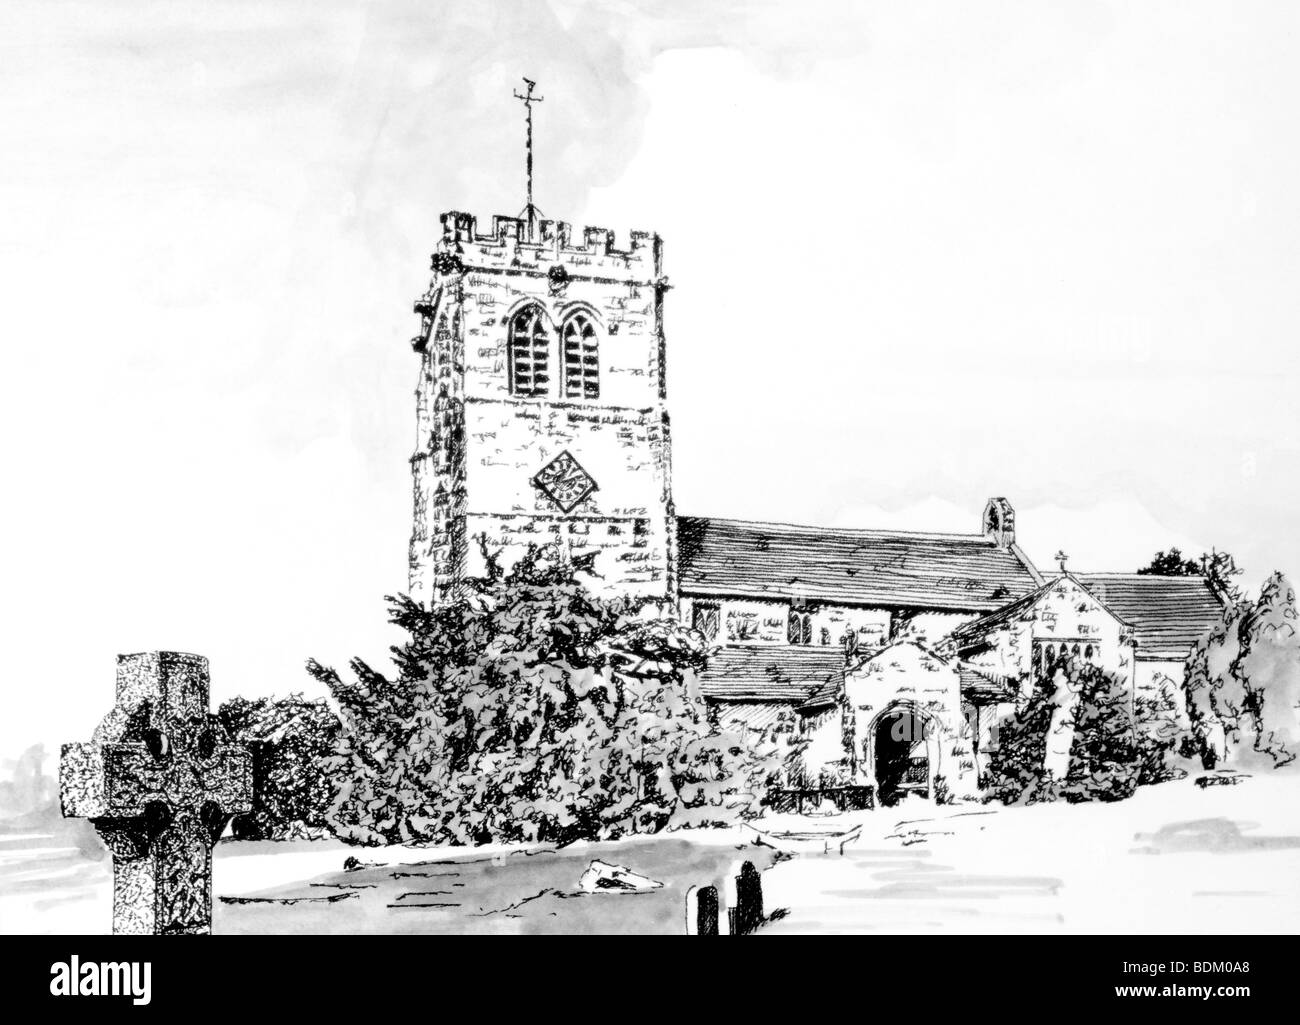 UK, Cheshire, Nether Alderley, Saint, Marys Parish Church, pencil and wash drawing Stock Photo